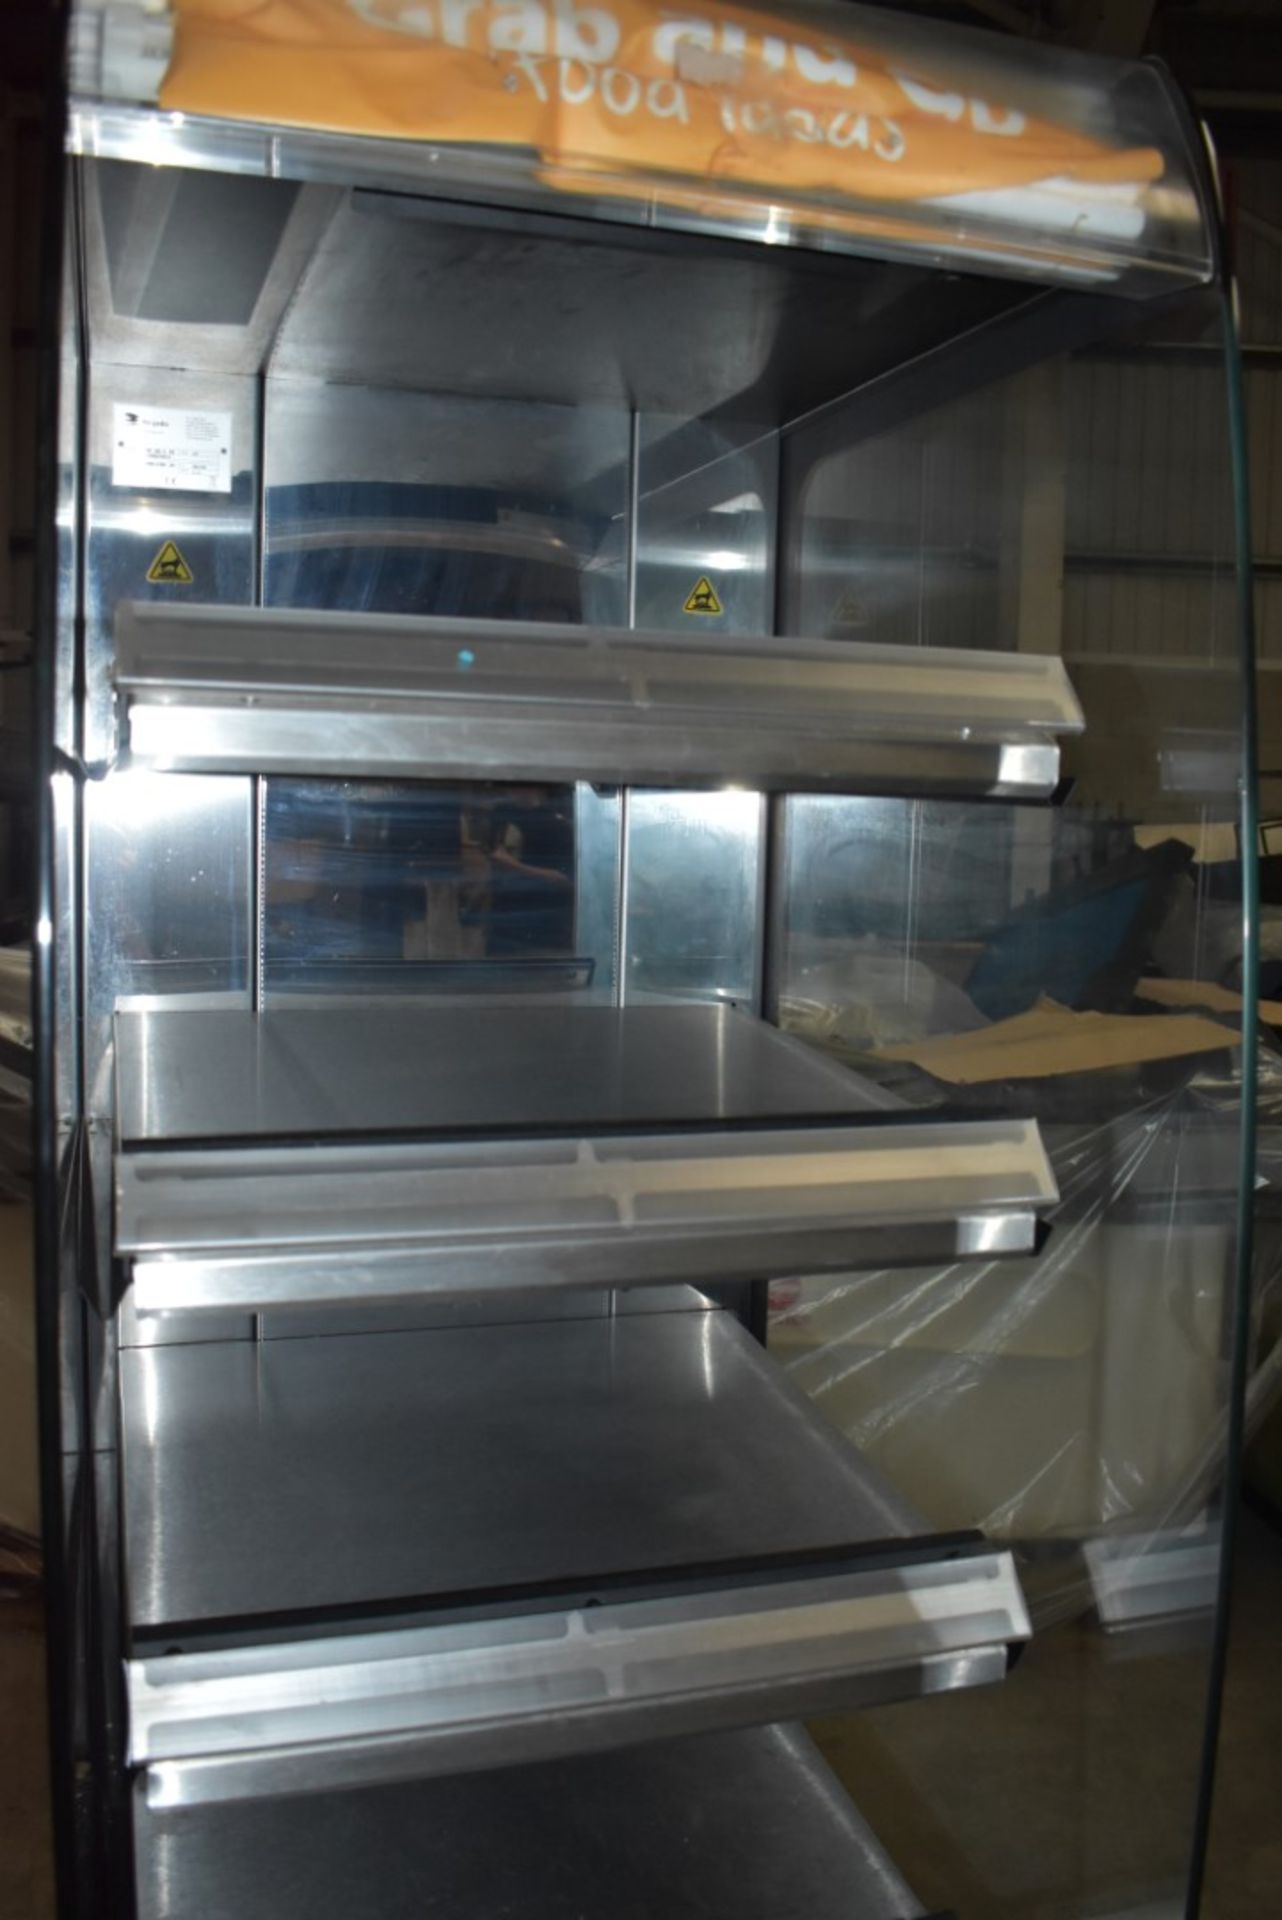 1 x Fri-Jado Four Tier Multi Deck Hot Food Warmer Heated Display Unit - Model MD60-5 SB - - Image 6 of 9